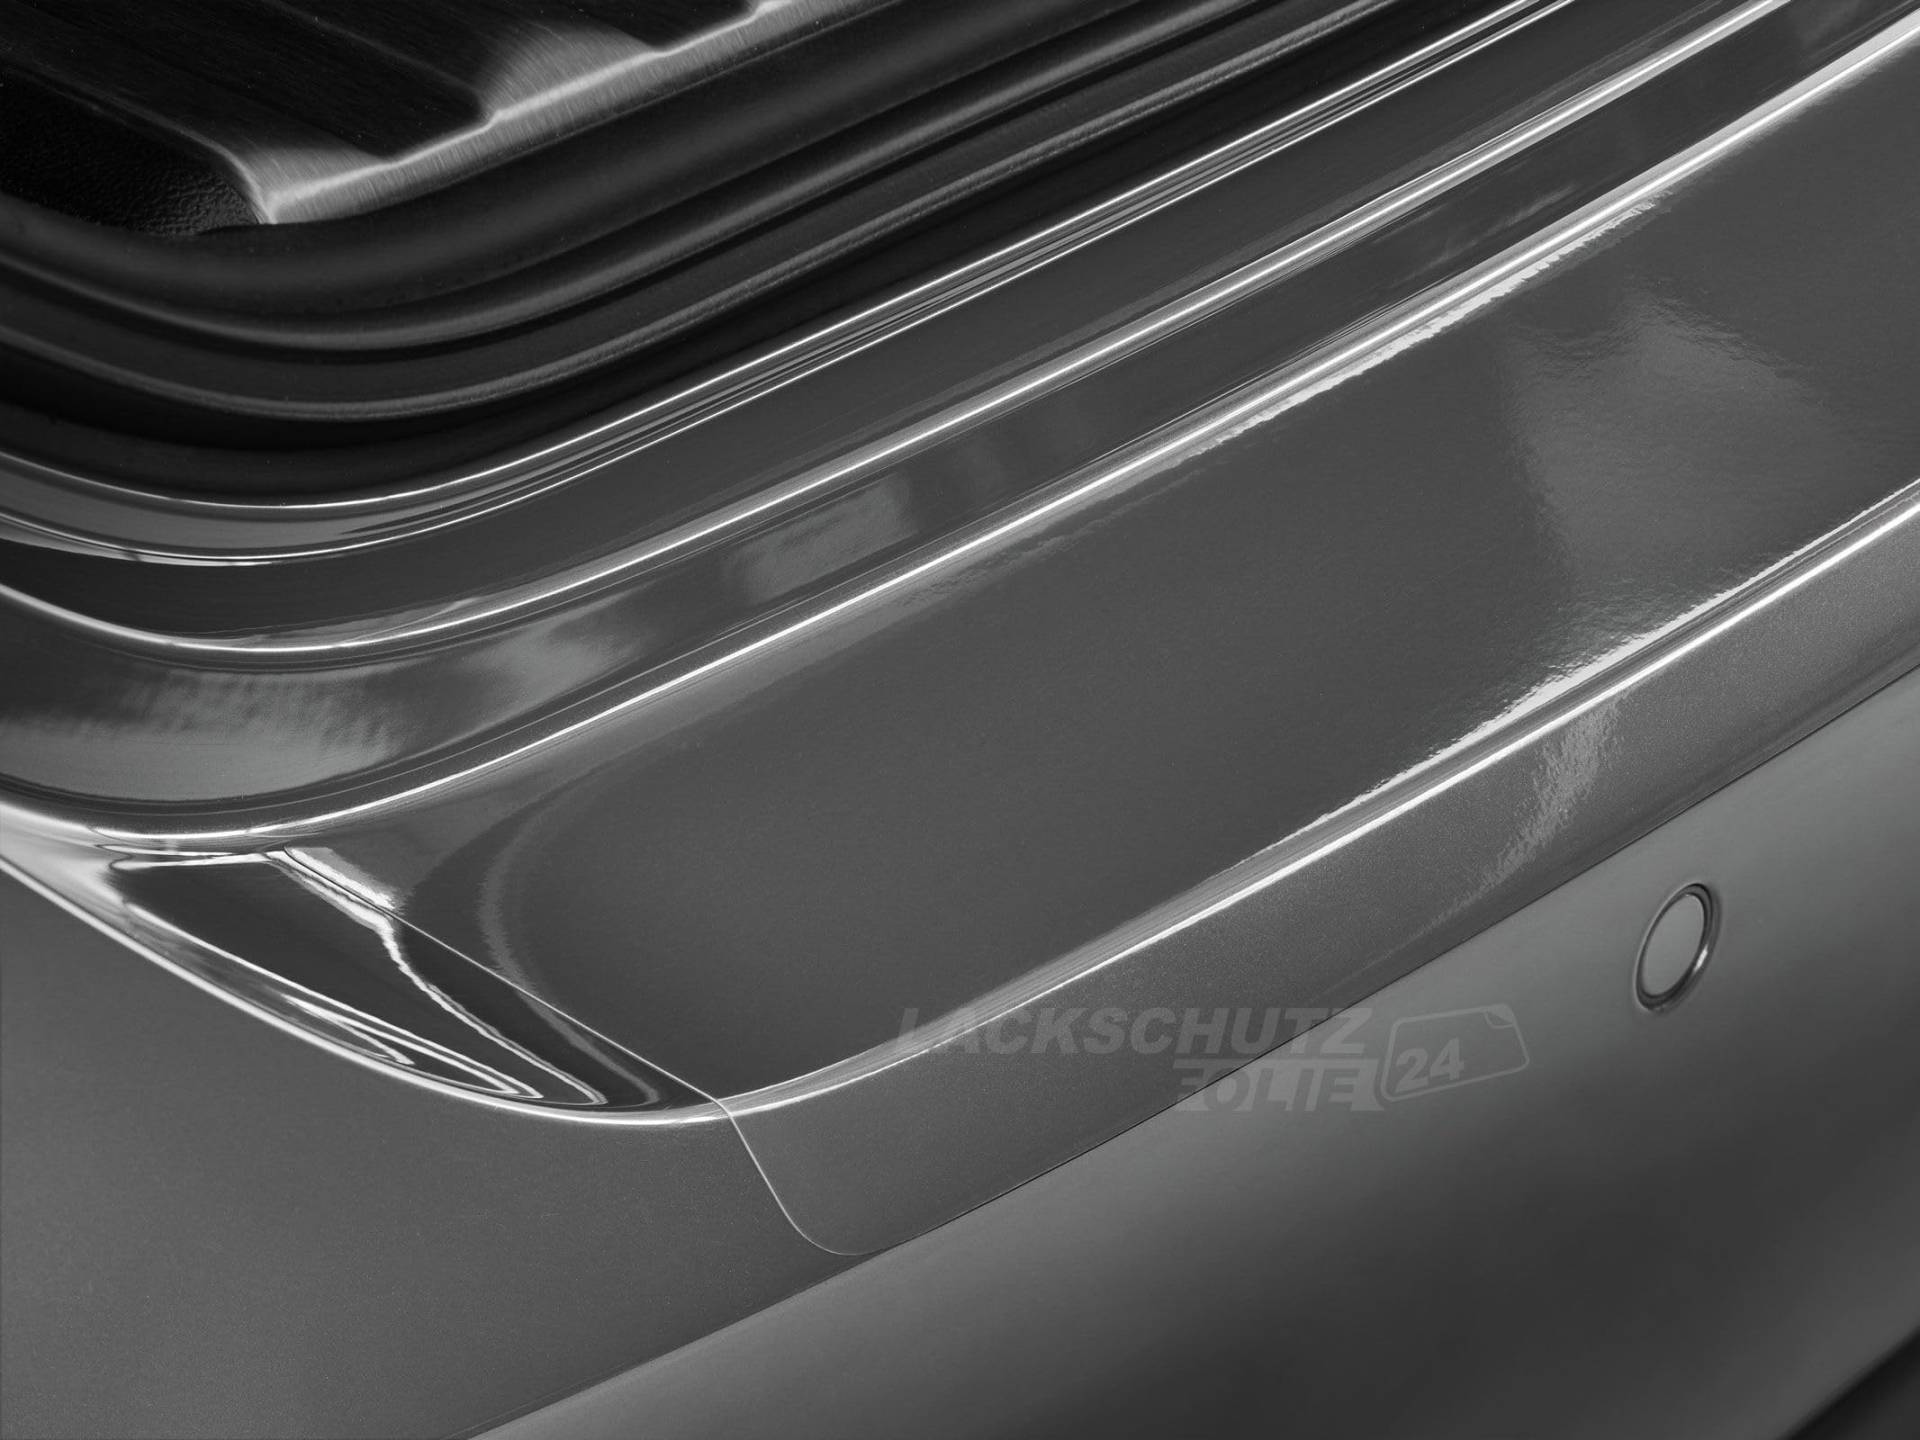 LSF24 - Ladekantenschutzfolie - Transparent Glatt Hochglänzend für Audi A6 Avant (Kombi) C7, Typ 4G, BJ 10/2011-2018 von Lackschutzfolie24